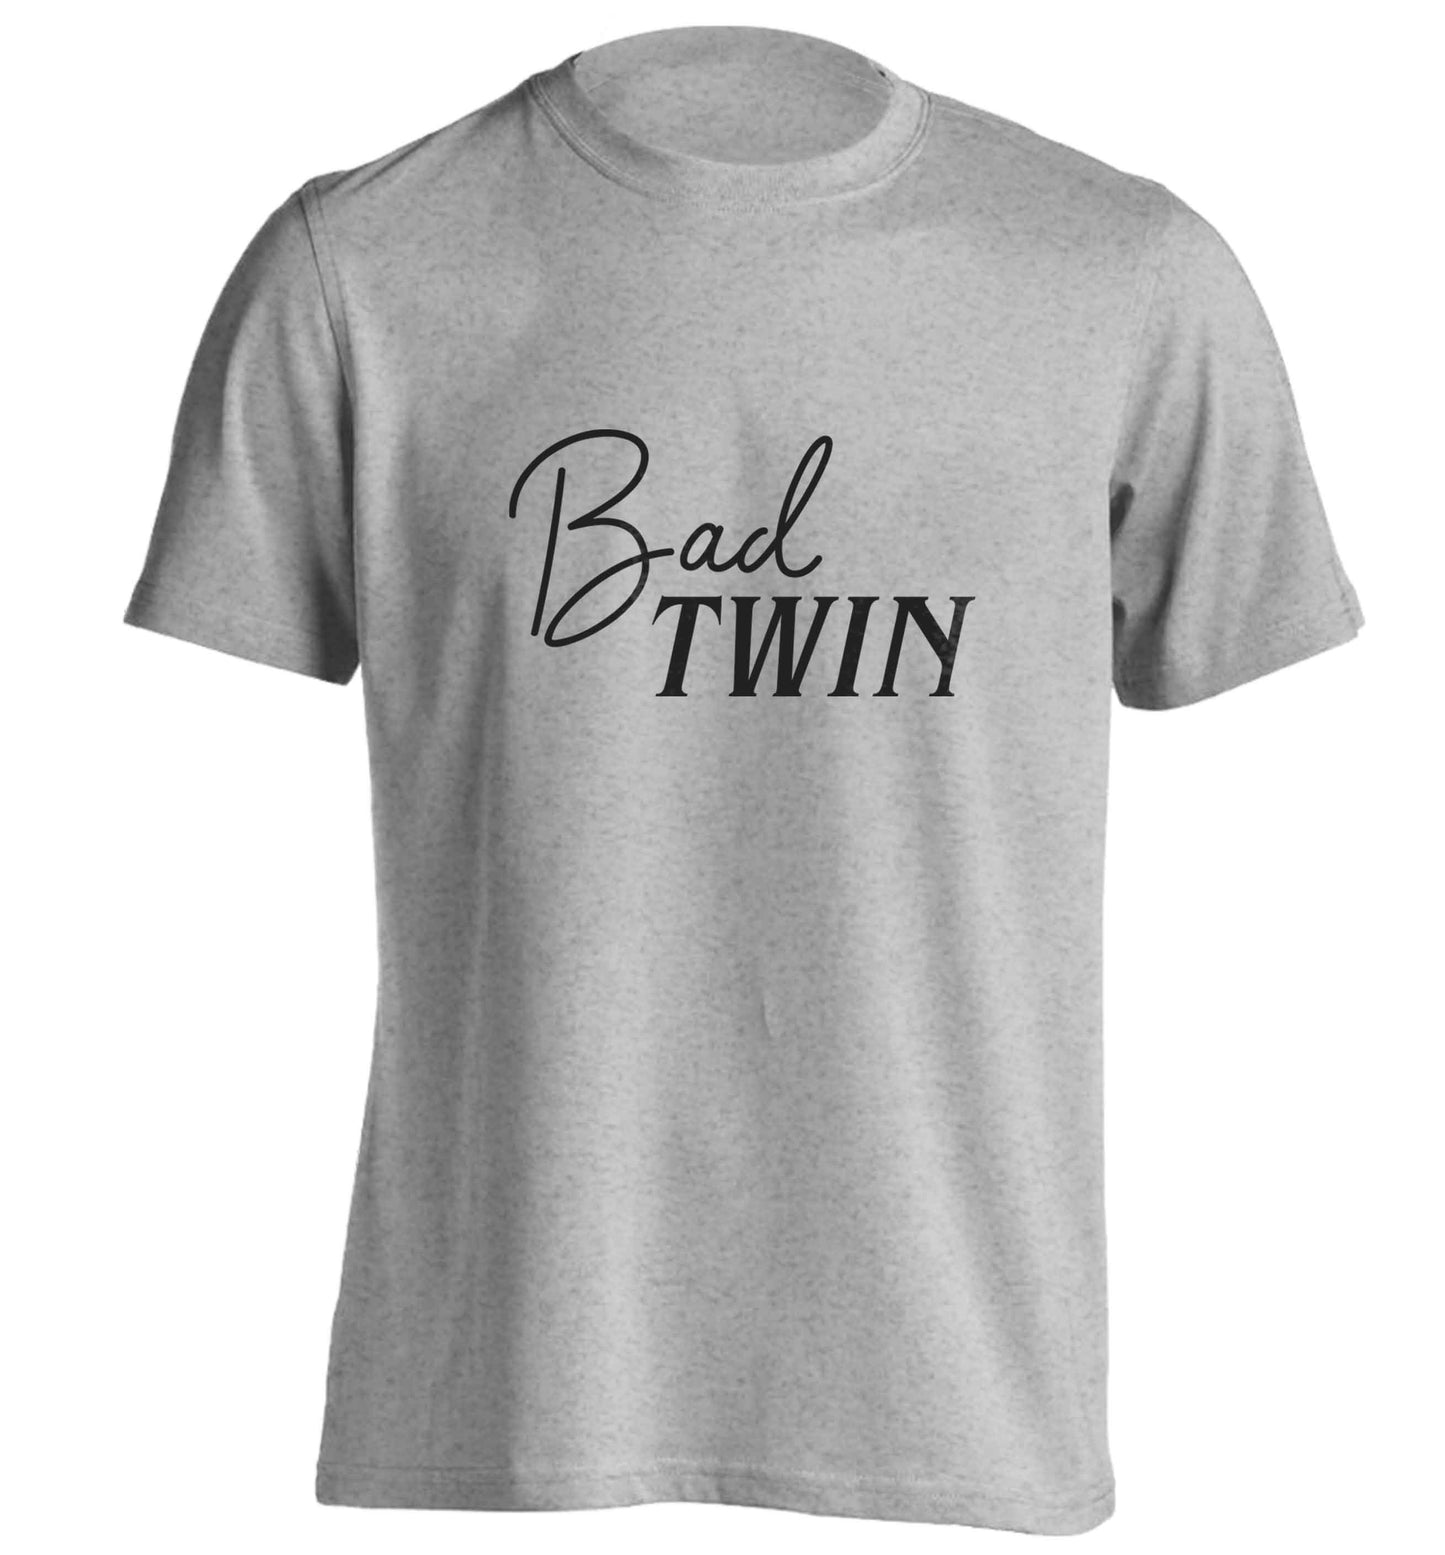 Bad twin adults unisex grey Tshirt 2XL